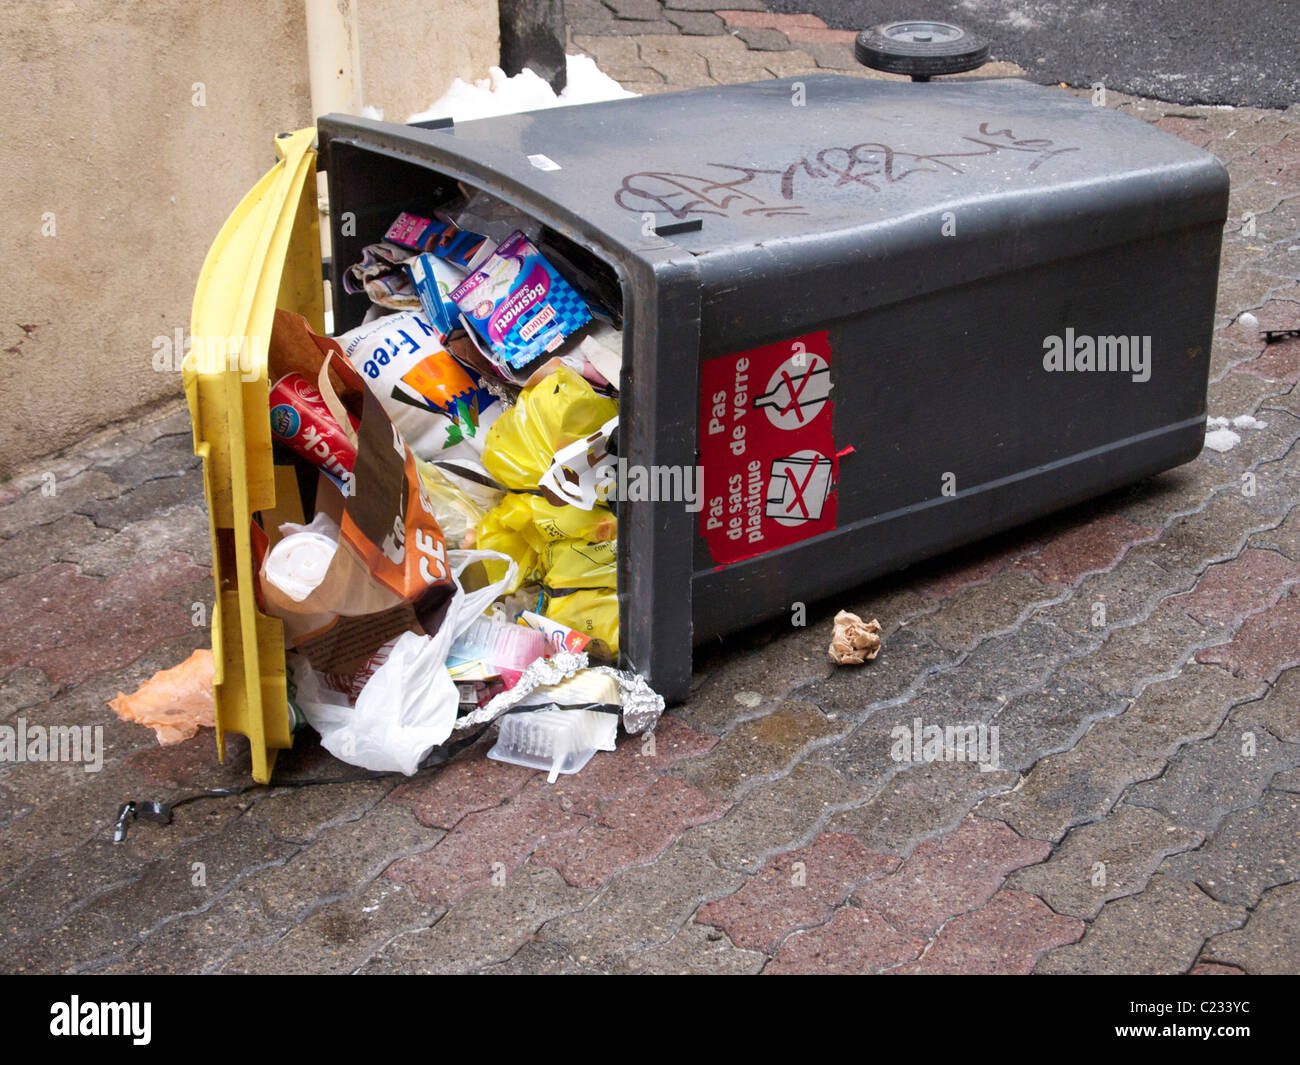 Waste bin / rubbish bins overflowing Stock Photo